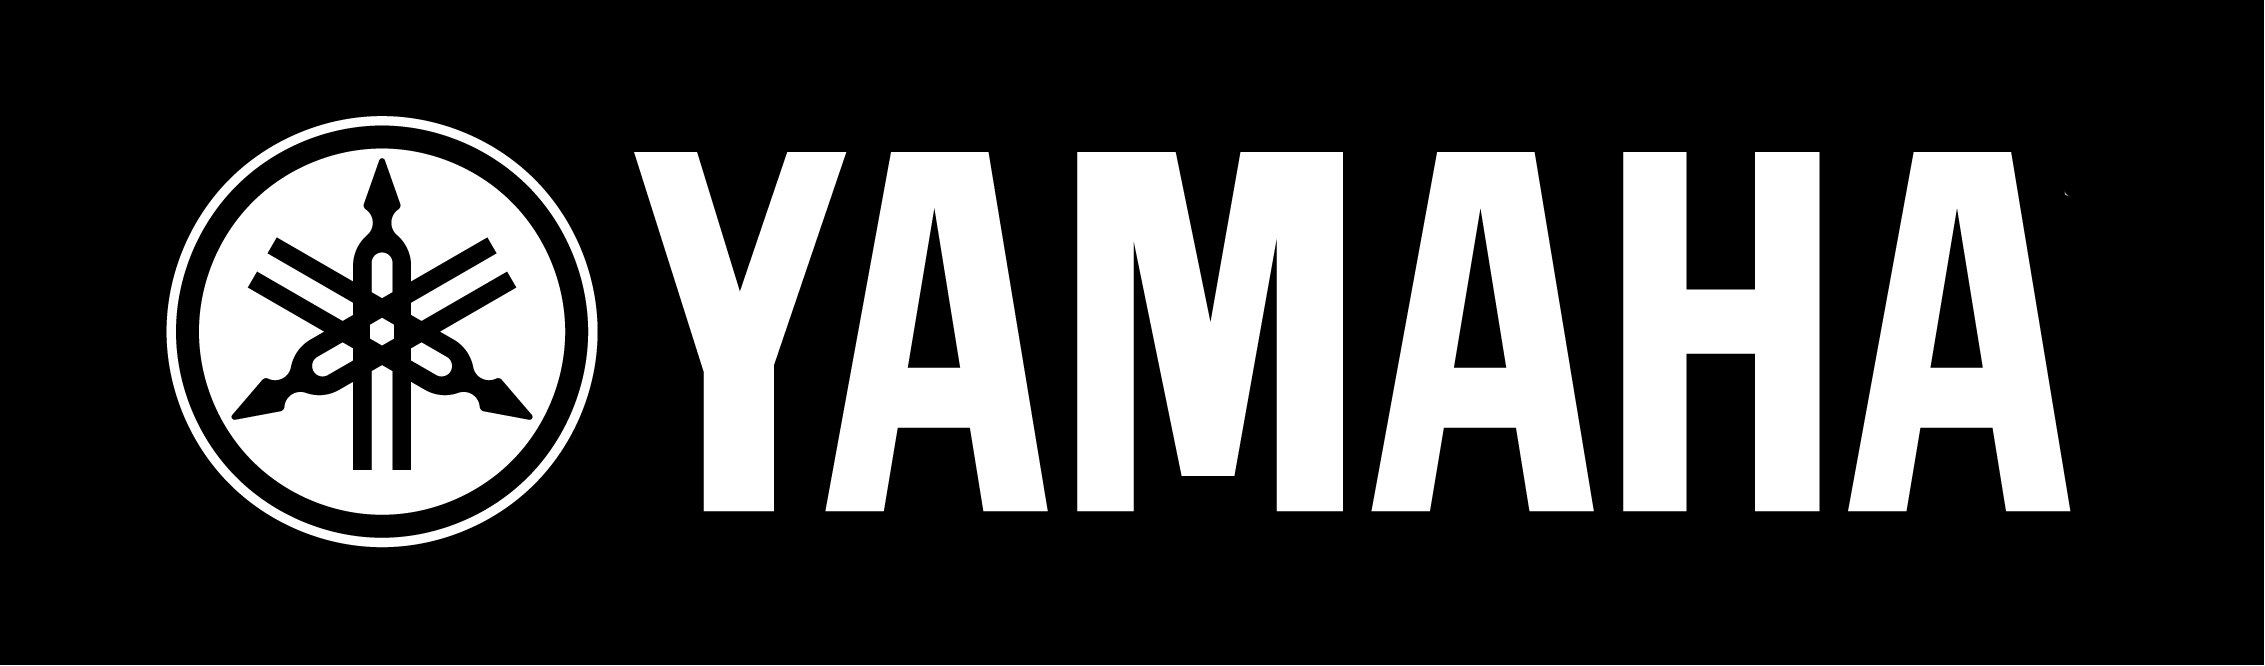 Yamaha Logo .jpg - Yamaha, Transparent background PNG HD thumbnail